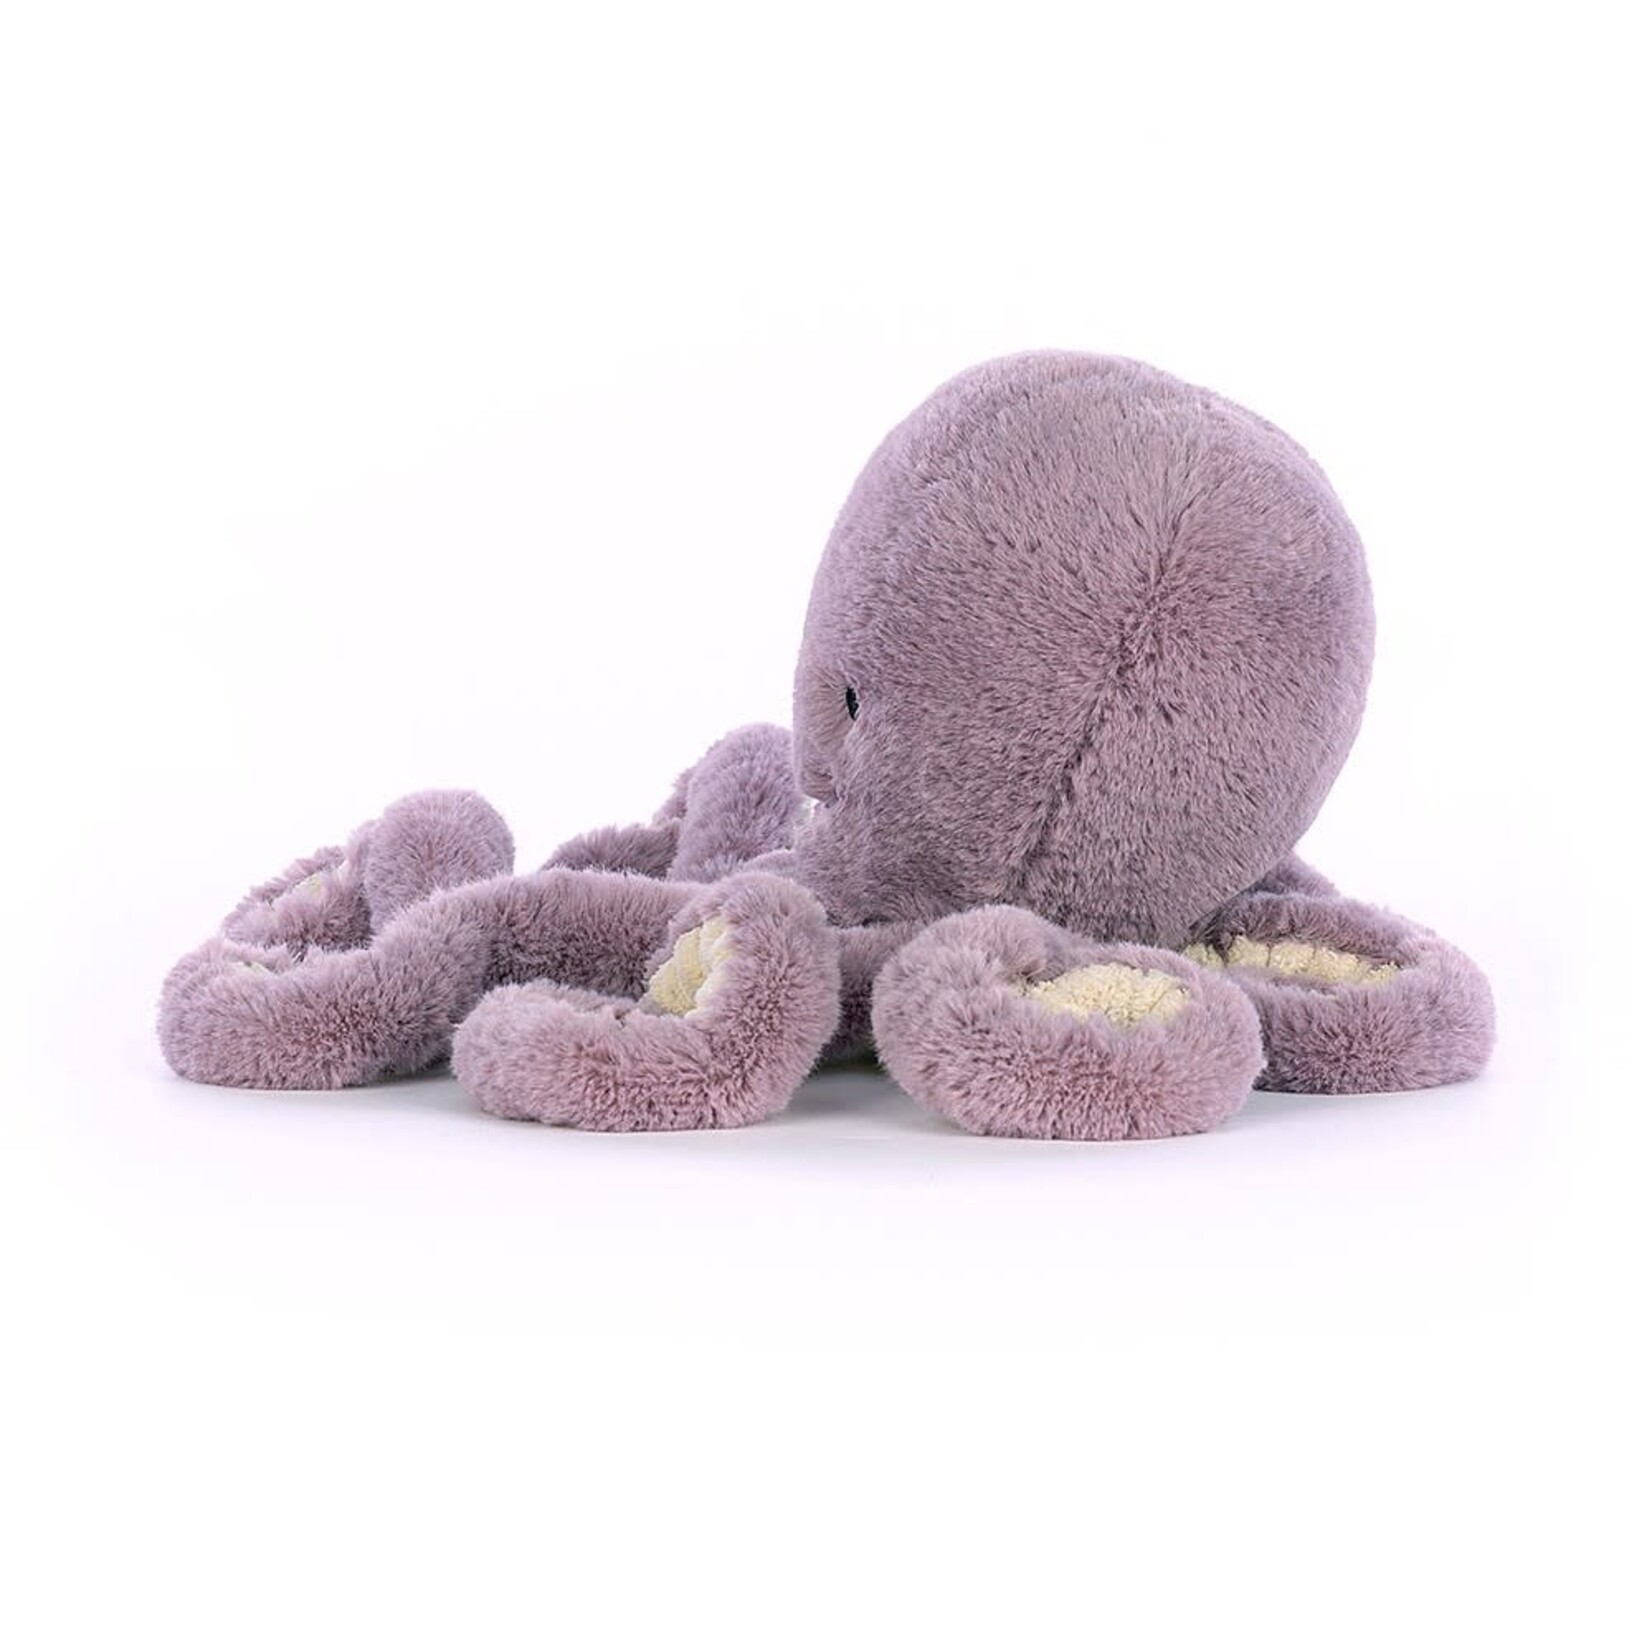 Jellycat JELLYCAT - Maya Octopus Plush in Mauve - Small